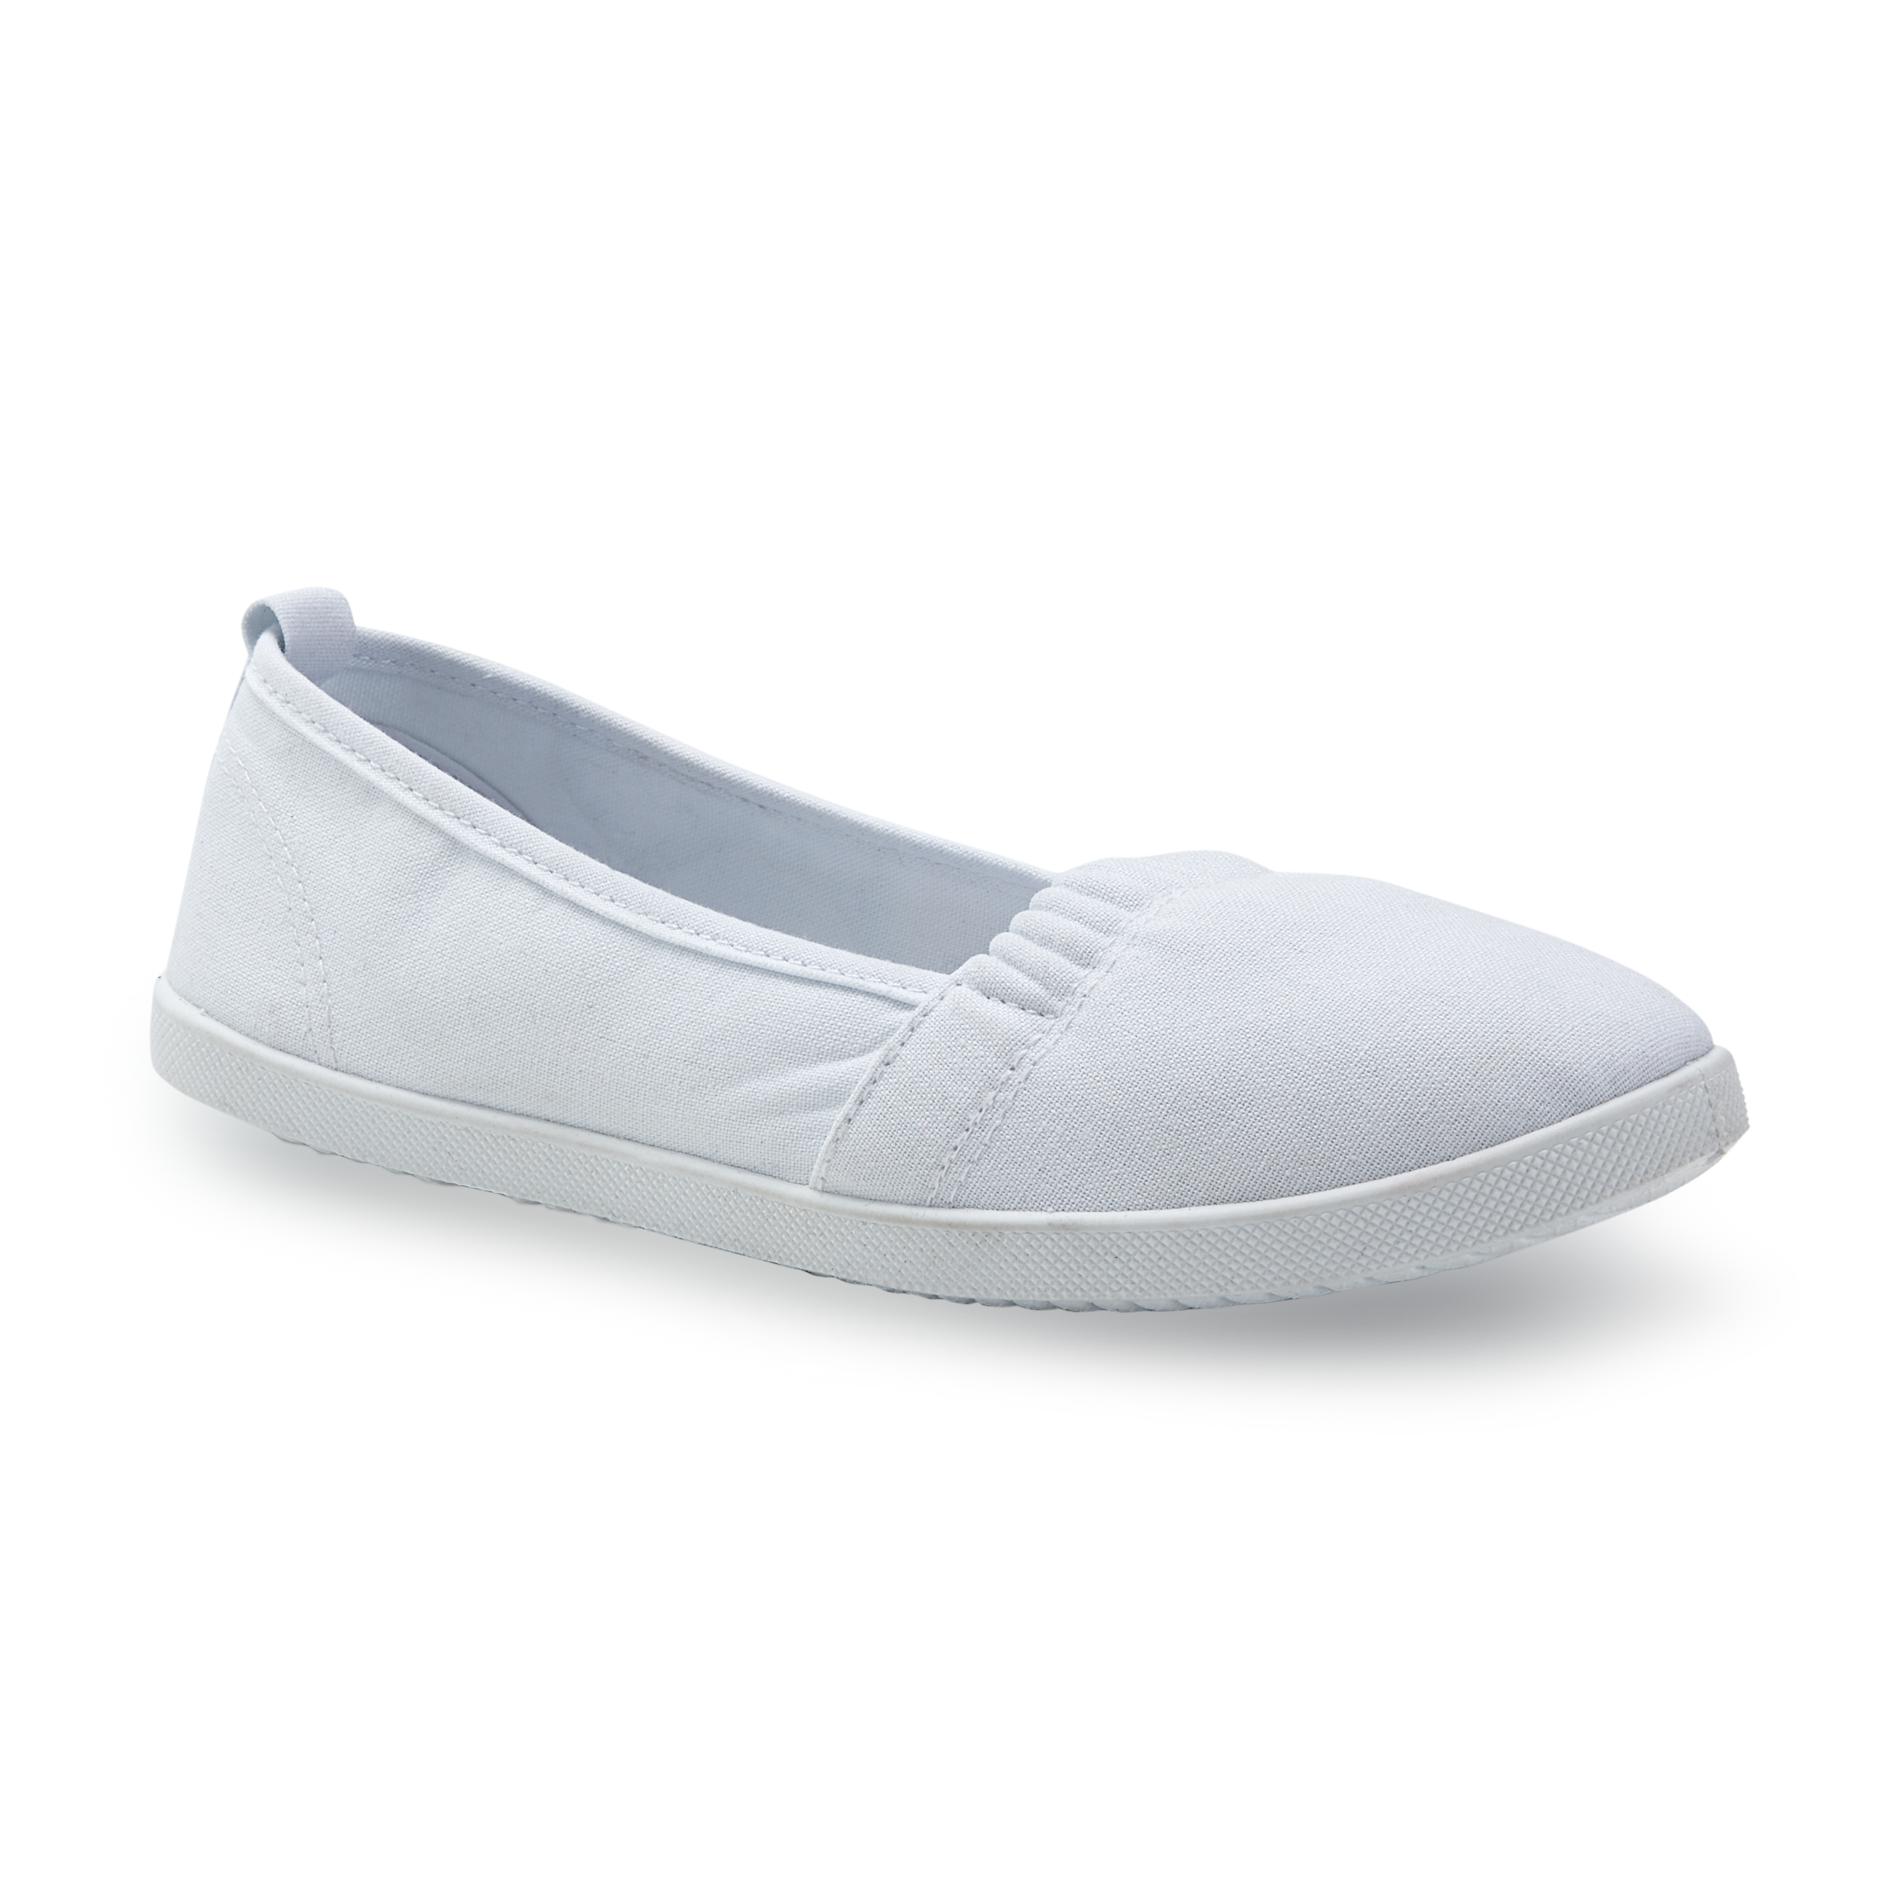 Basic Editions Women's Dakota White Casual Flat Shoe